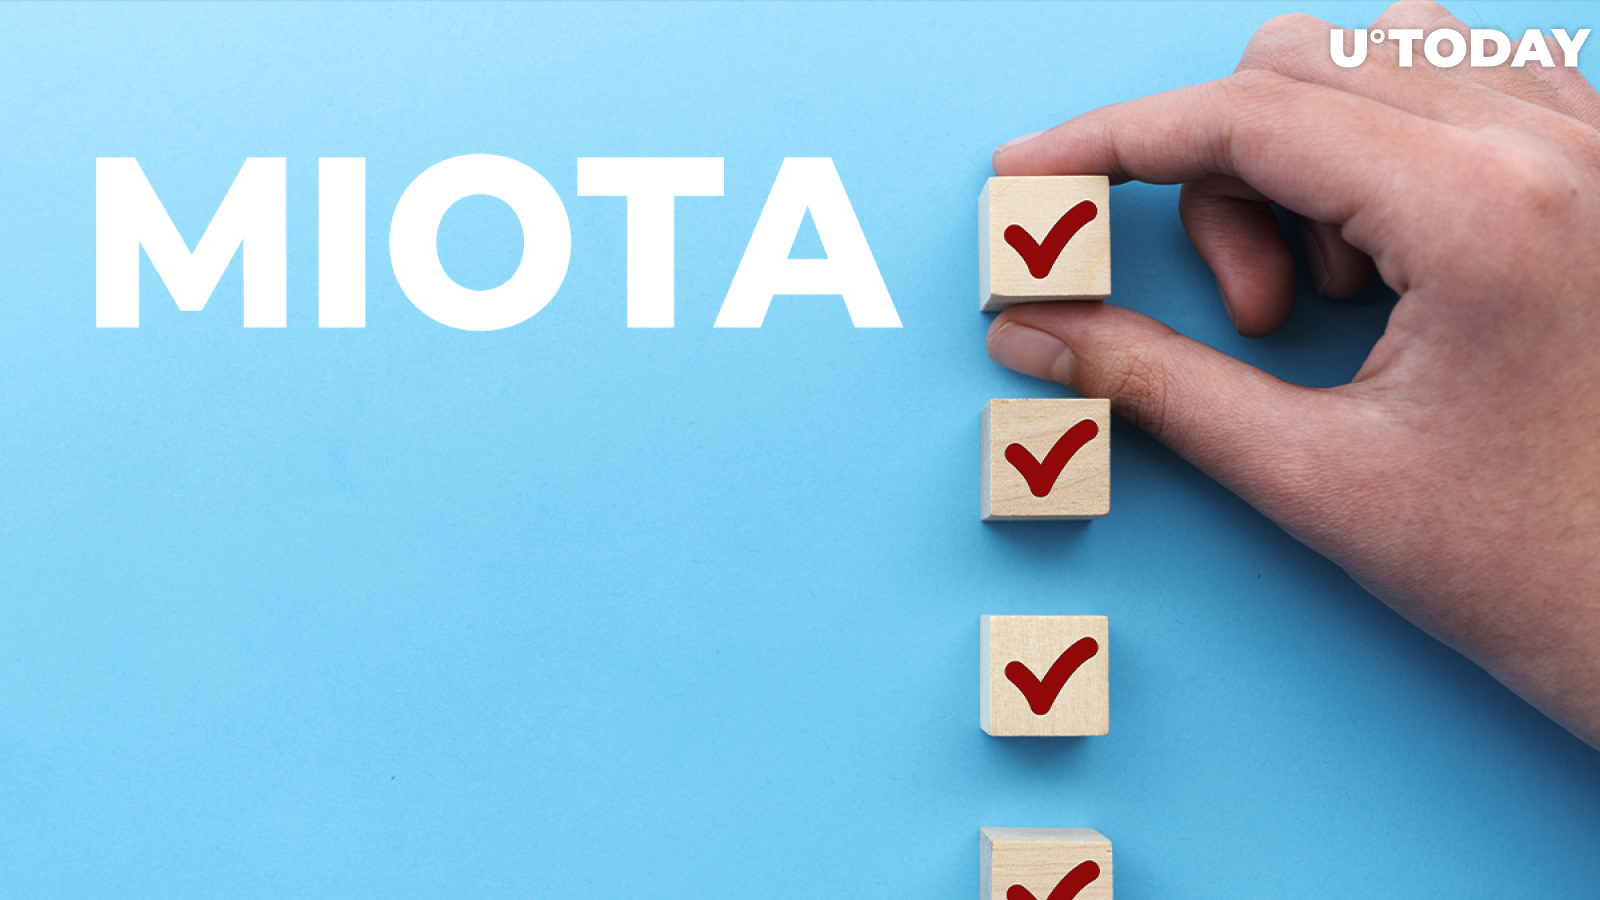 IOTA Foundation's Dominik Schiener Asks Sam Bankman-Fried to Integrate New IOTA